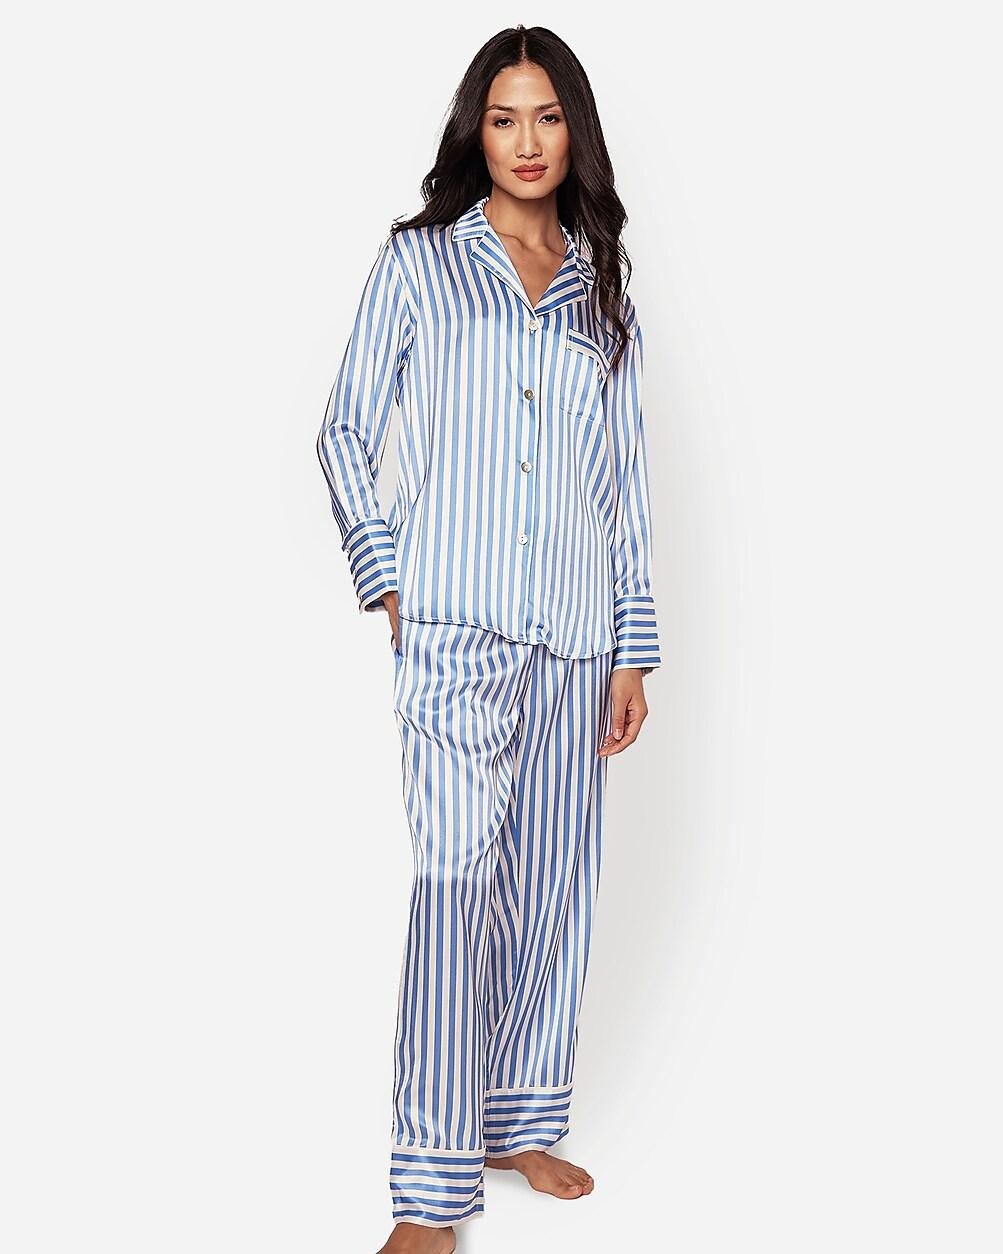 Petite Plume™ women's pajama set in mulberry silk stripe by J.CREW